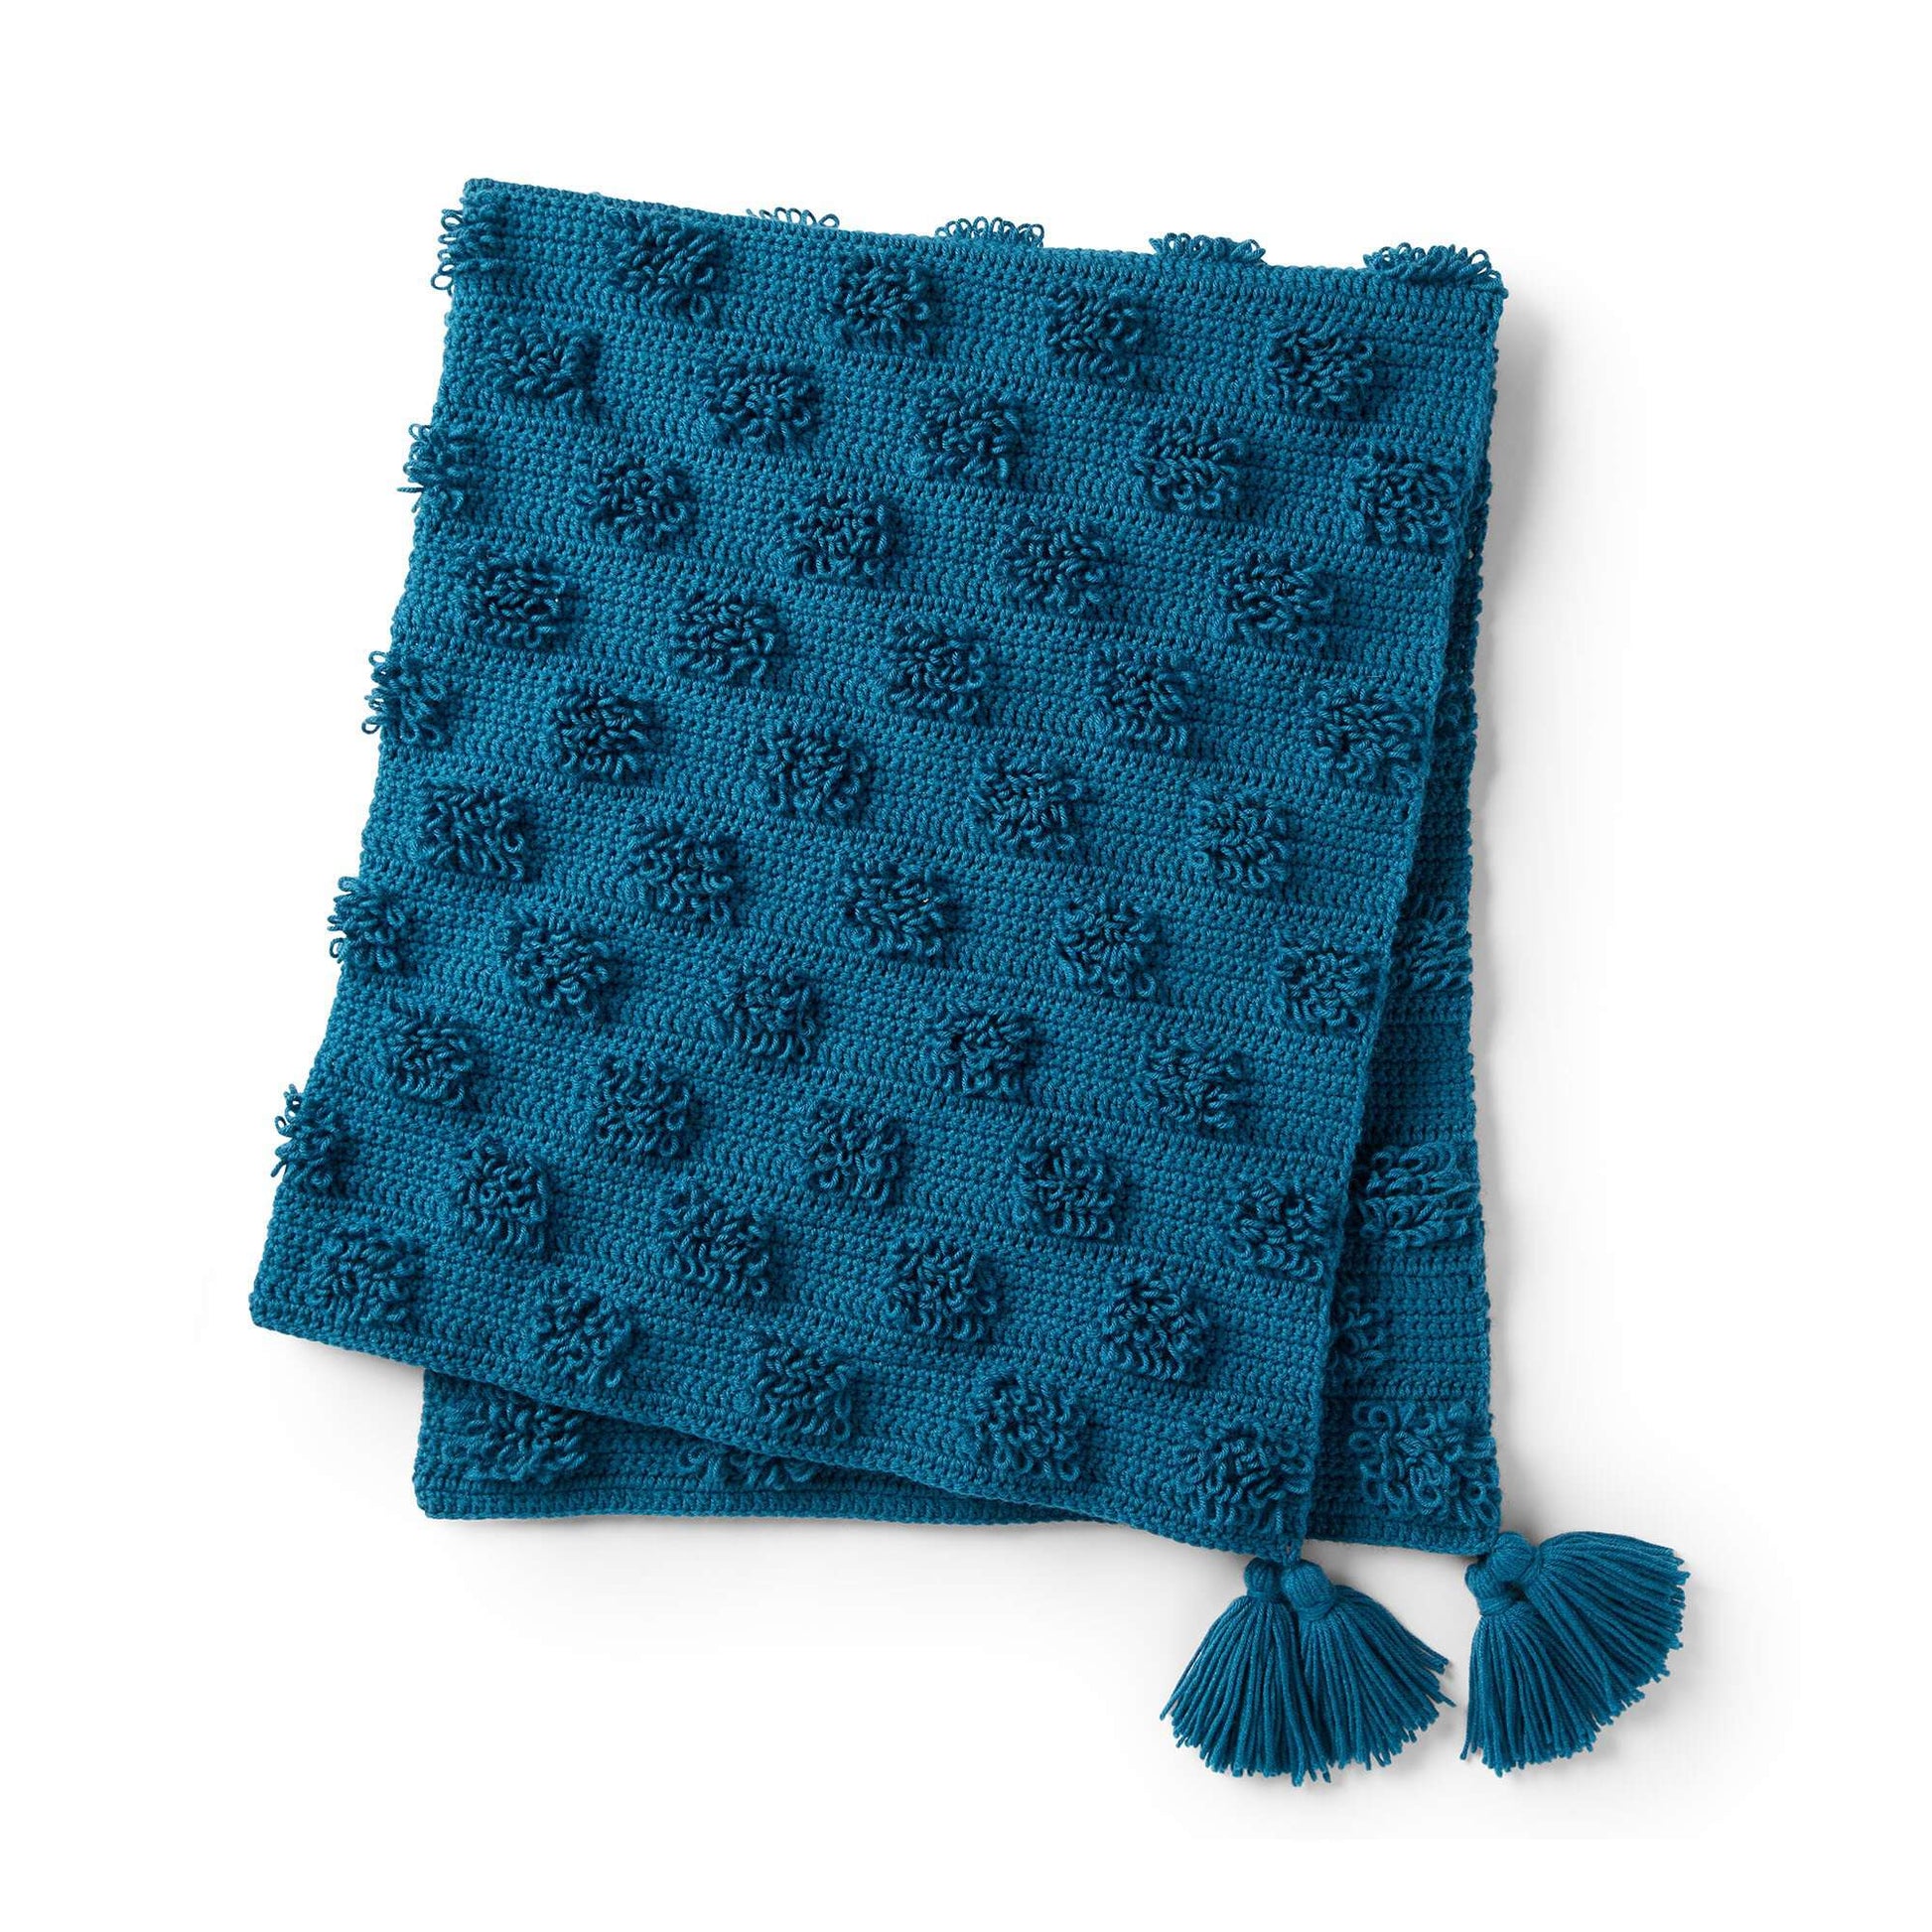 Free Caron Soft Tuft Crochet Blanket Pattern